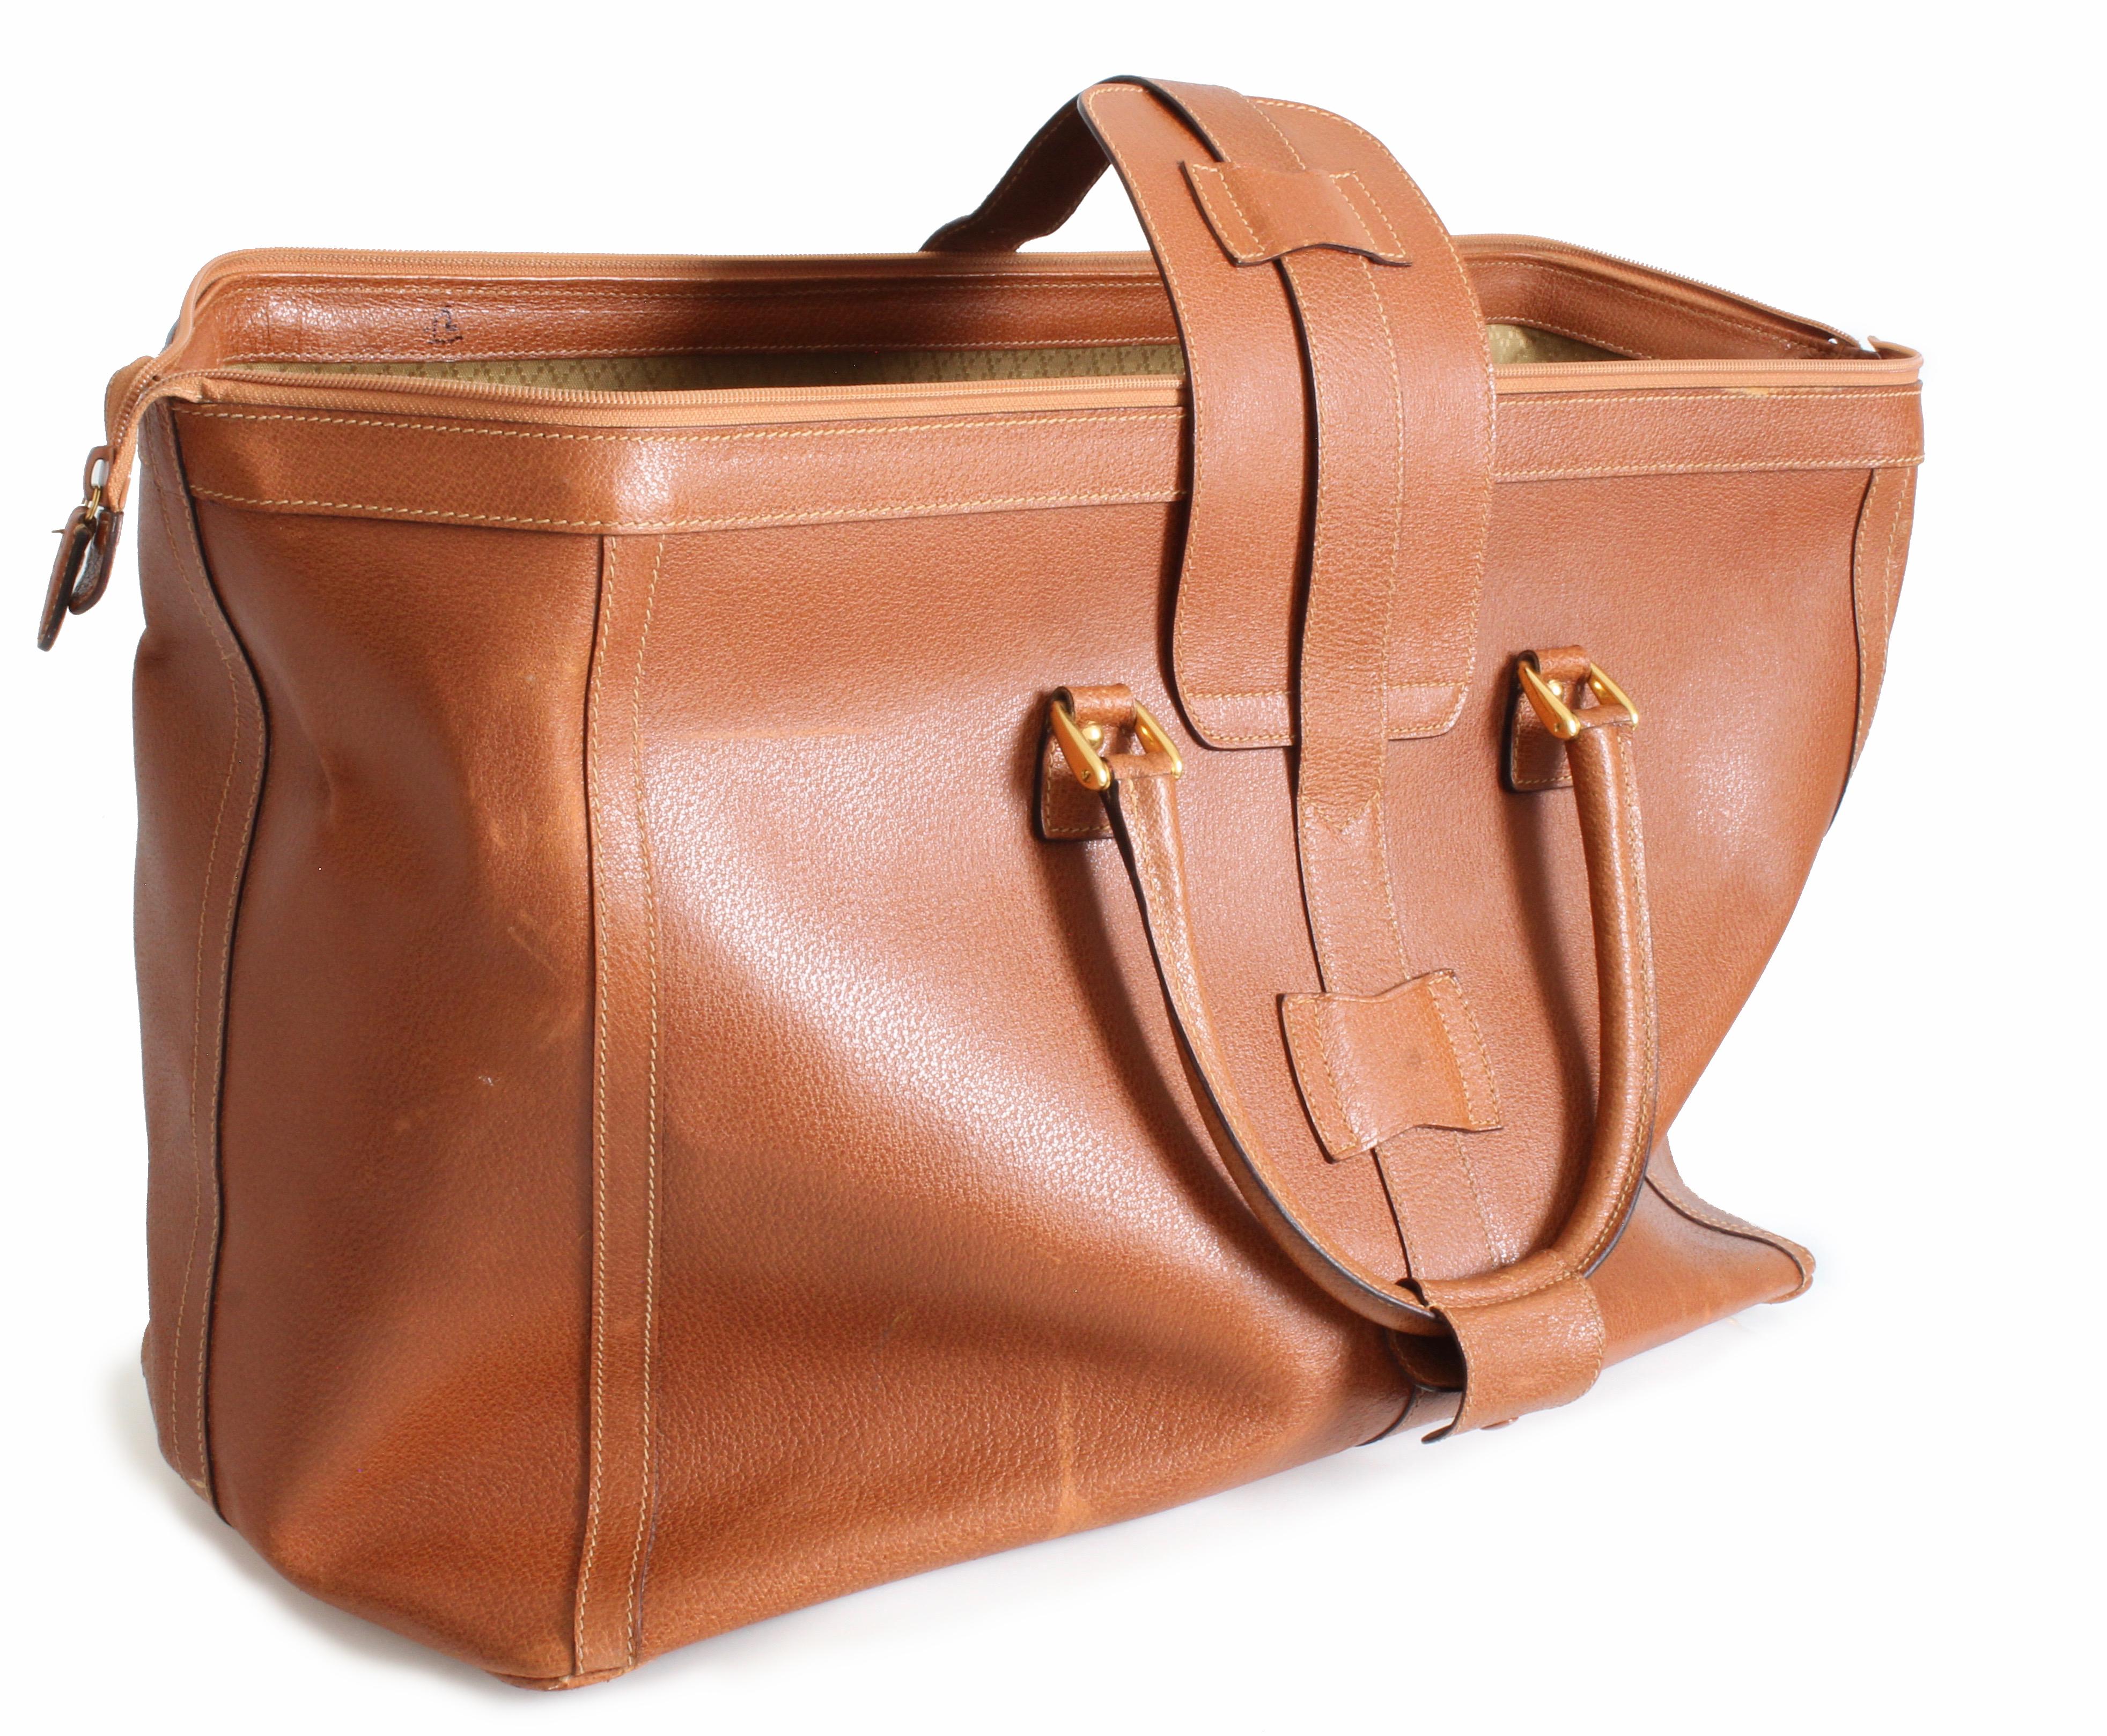 Orange Gucci Large Duffel Travel Bag Pigskin Leather Luggage Rare 65cm 